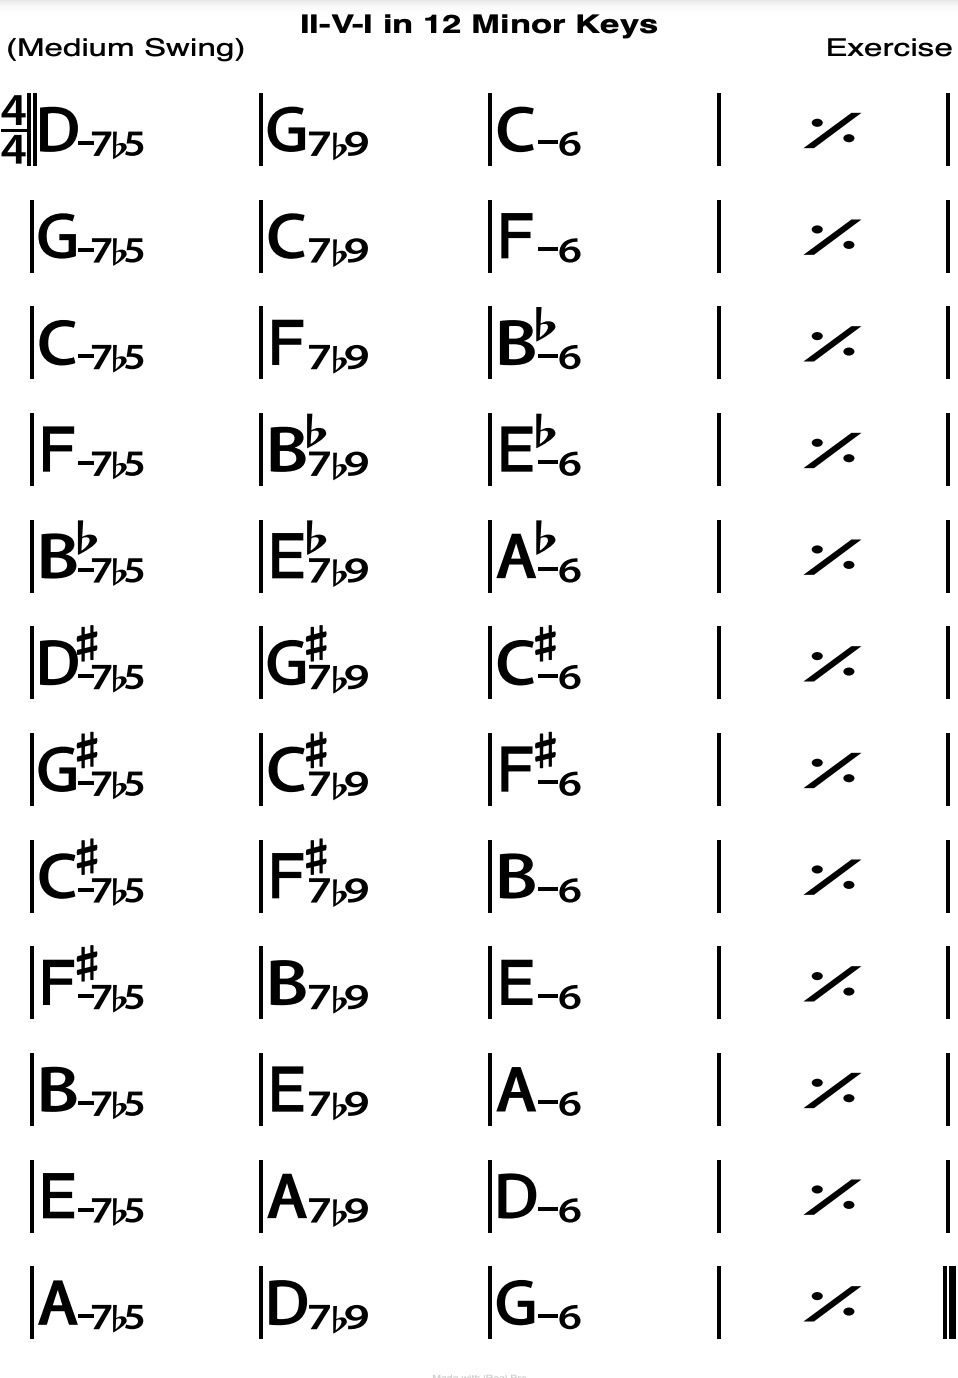 ii-V-i chord progressions in every minor key